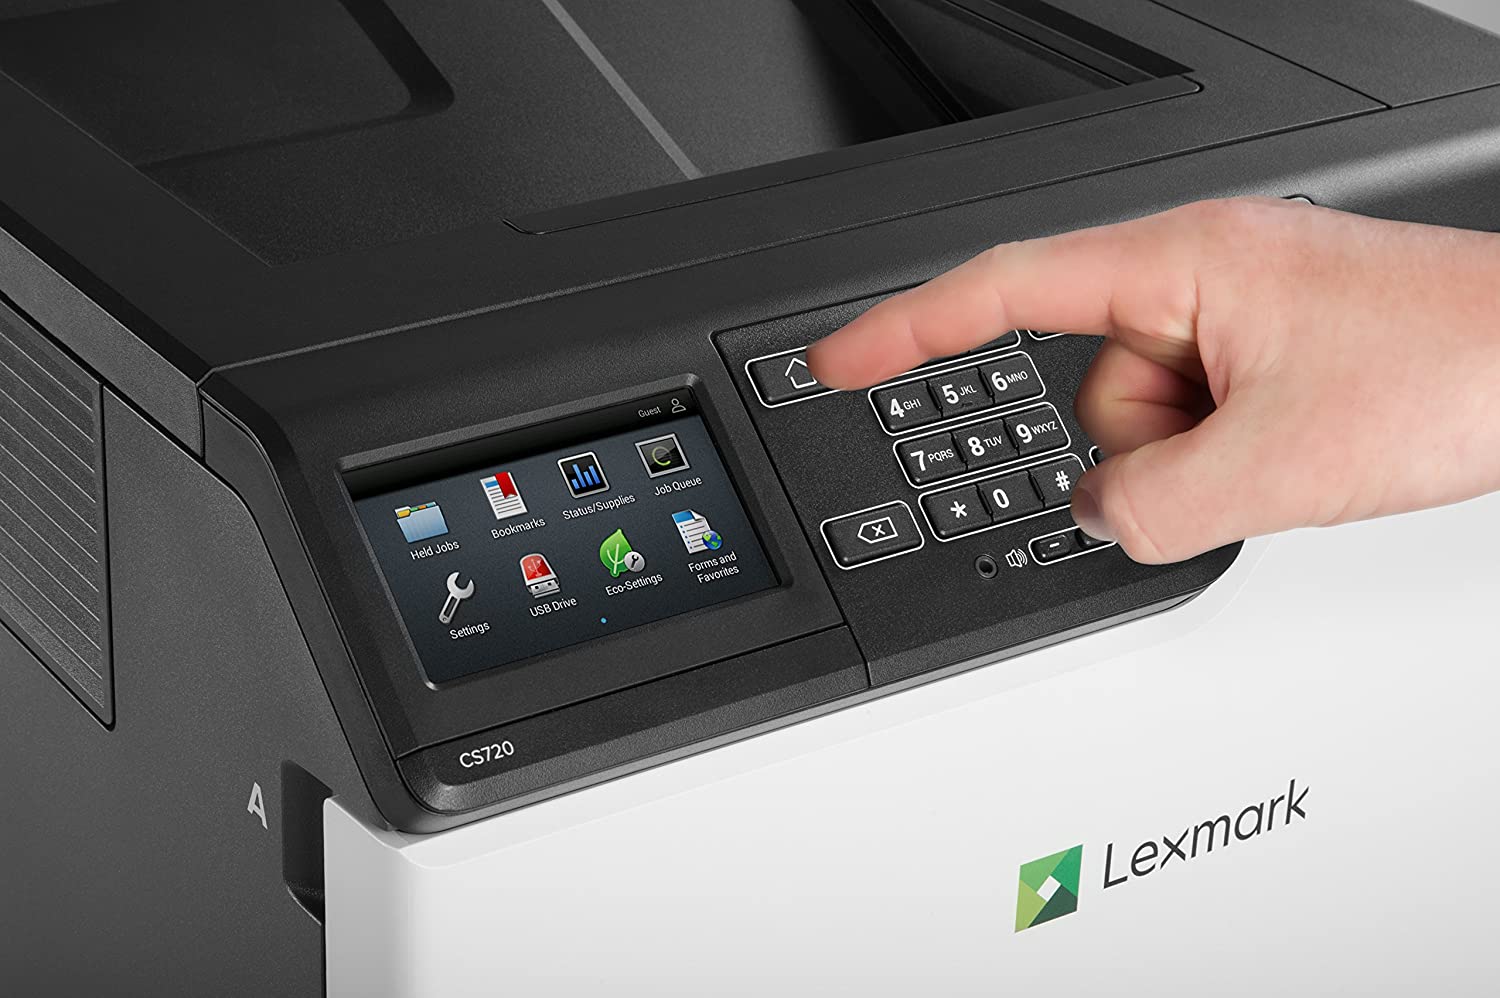 How can we perform the Lexmark Printer Setup?